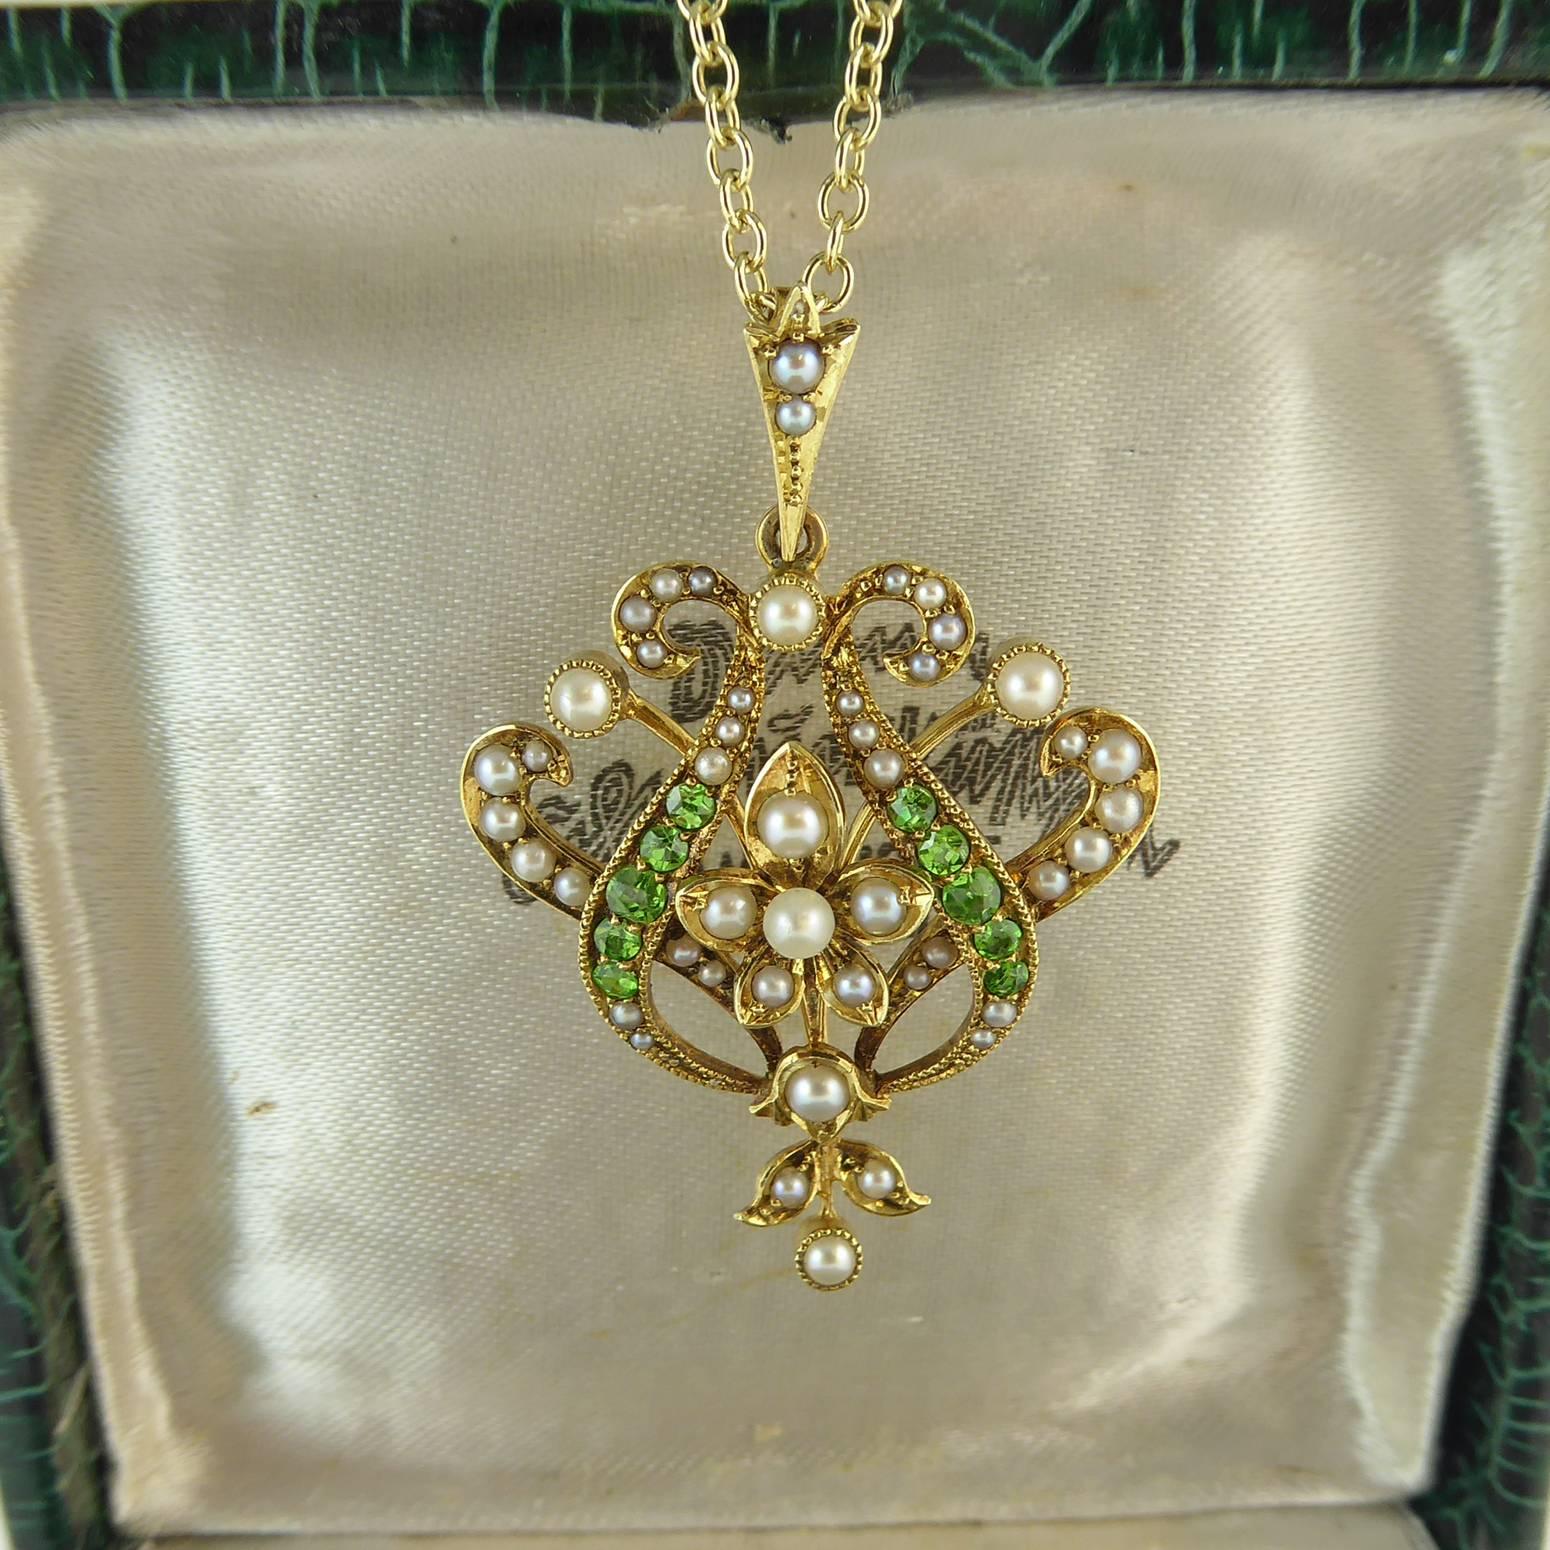 Antique Art Nouveau Pendant, 15 Carat Gold with Demantoid Garnet and Seed Pearls 4